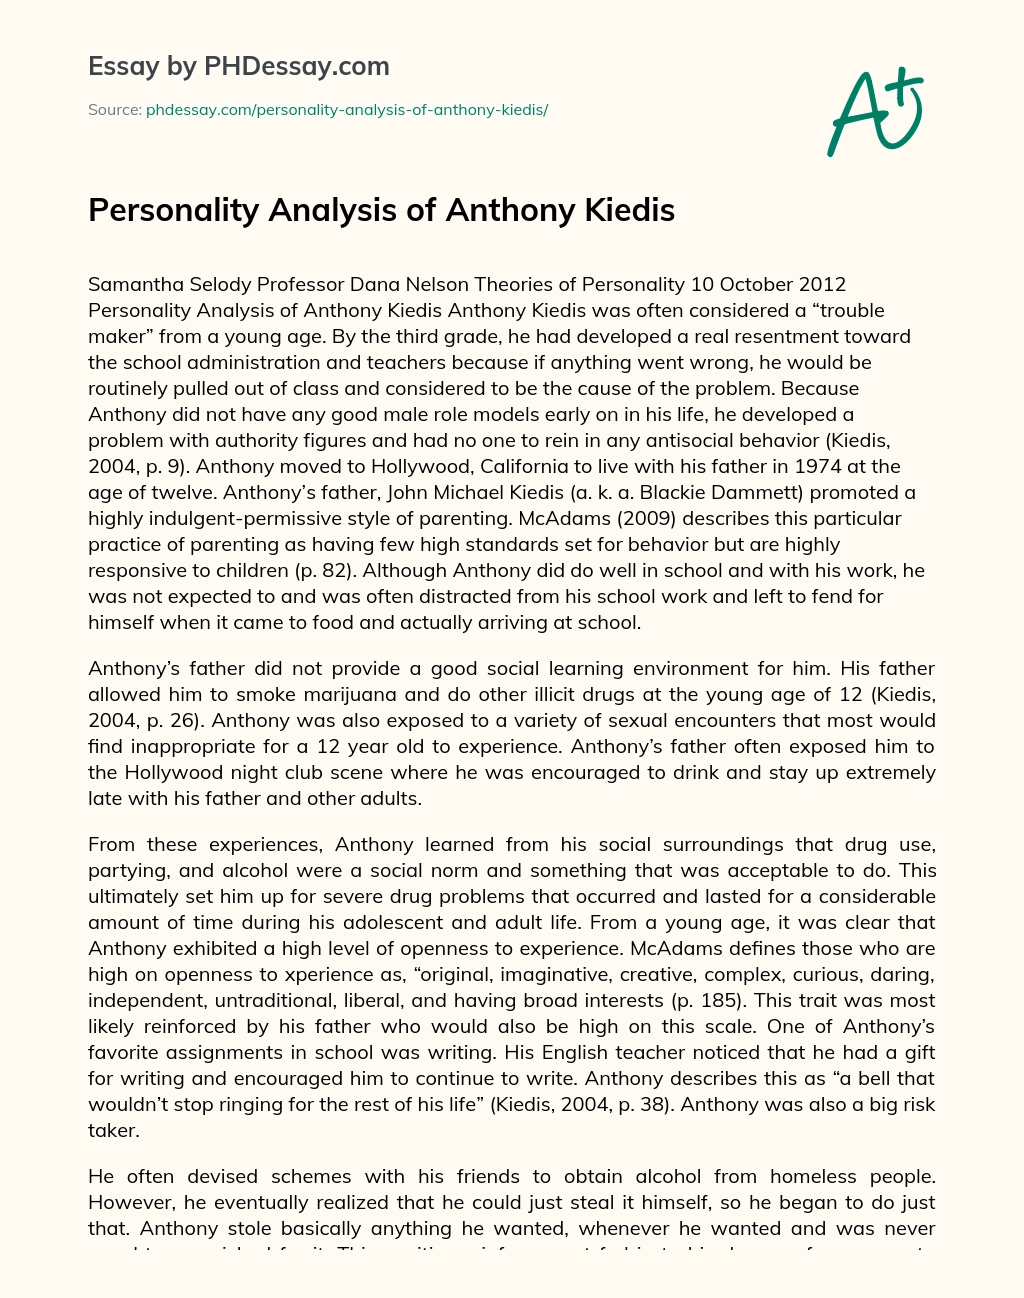 Personality Analysis of Anthony Kiedis essay